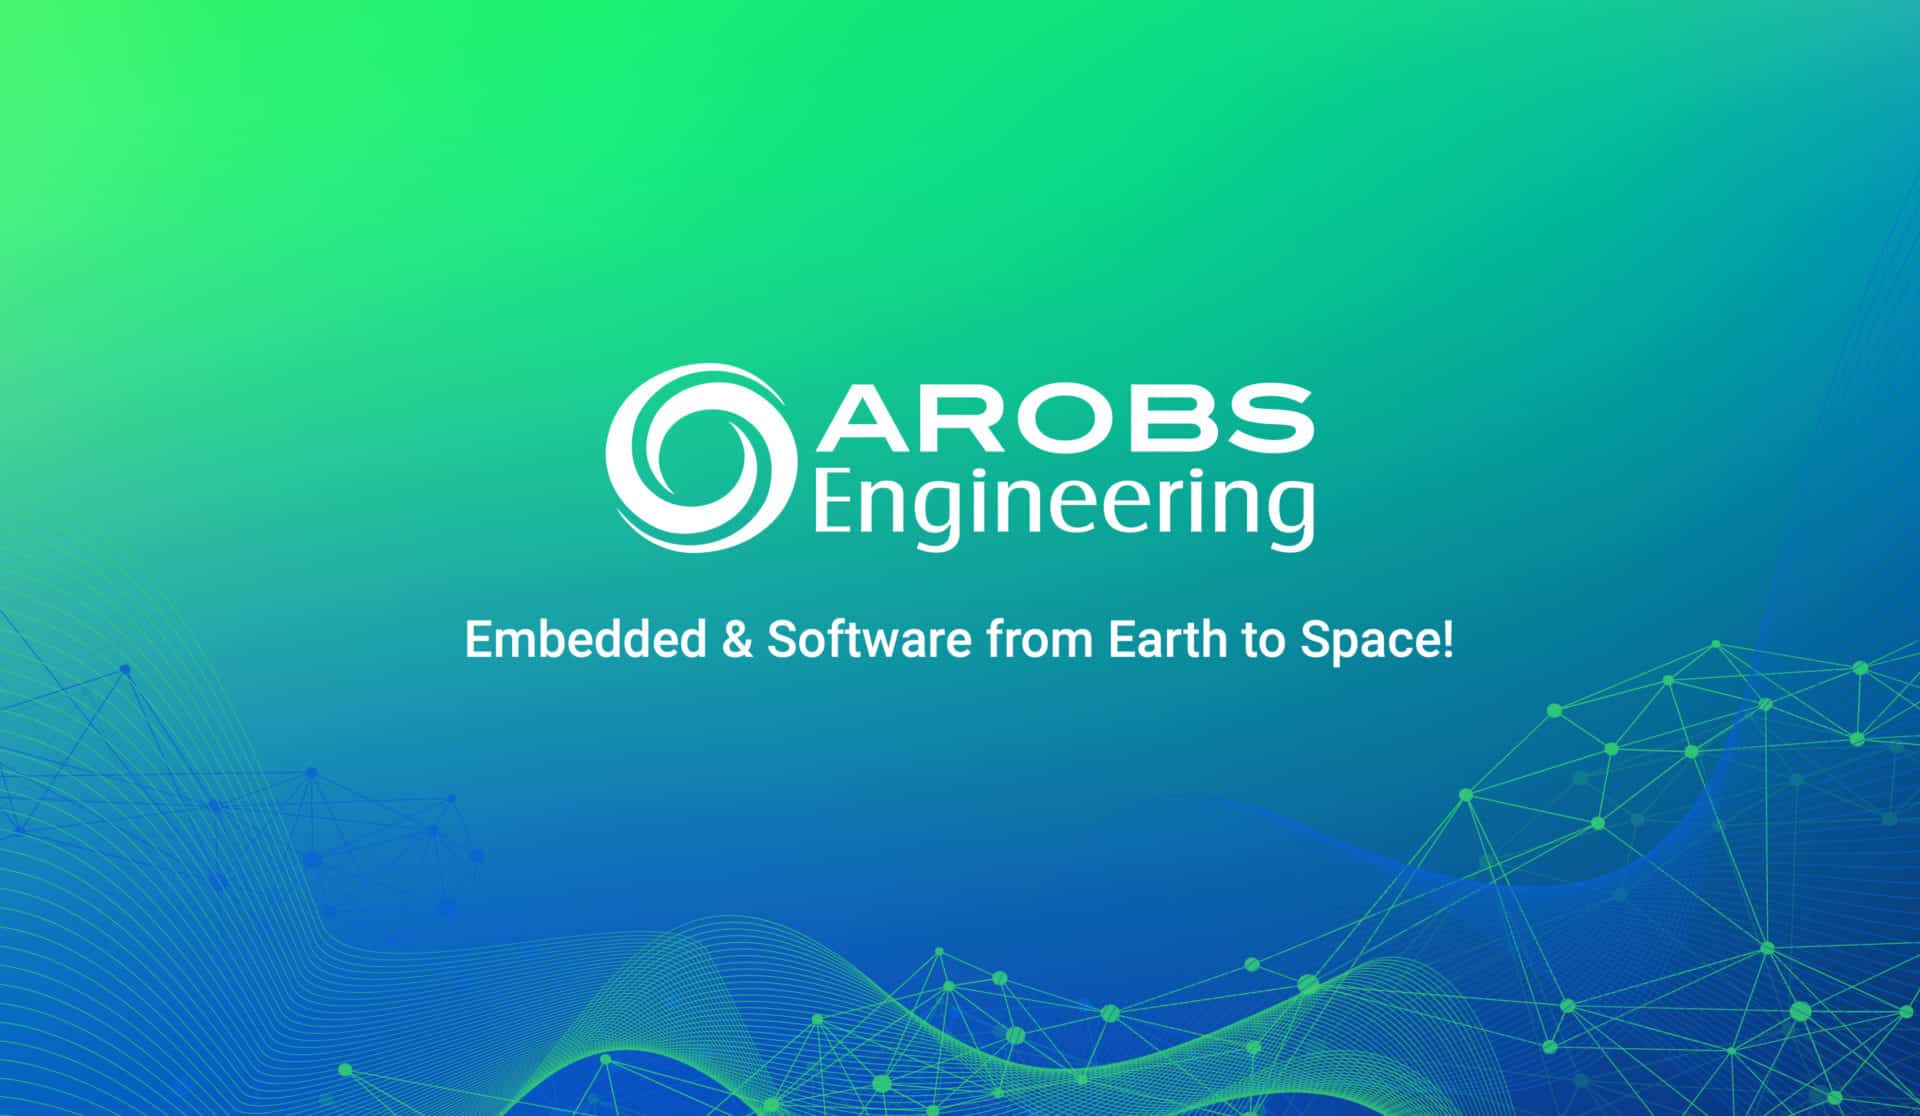 AROBS Engineering